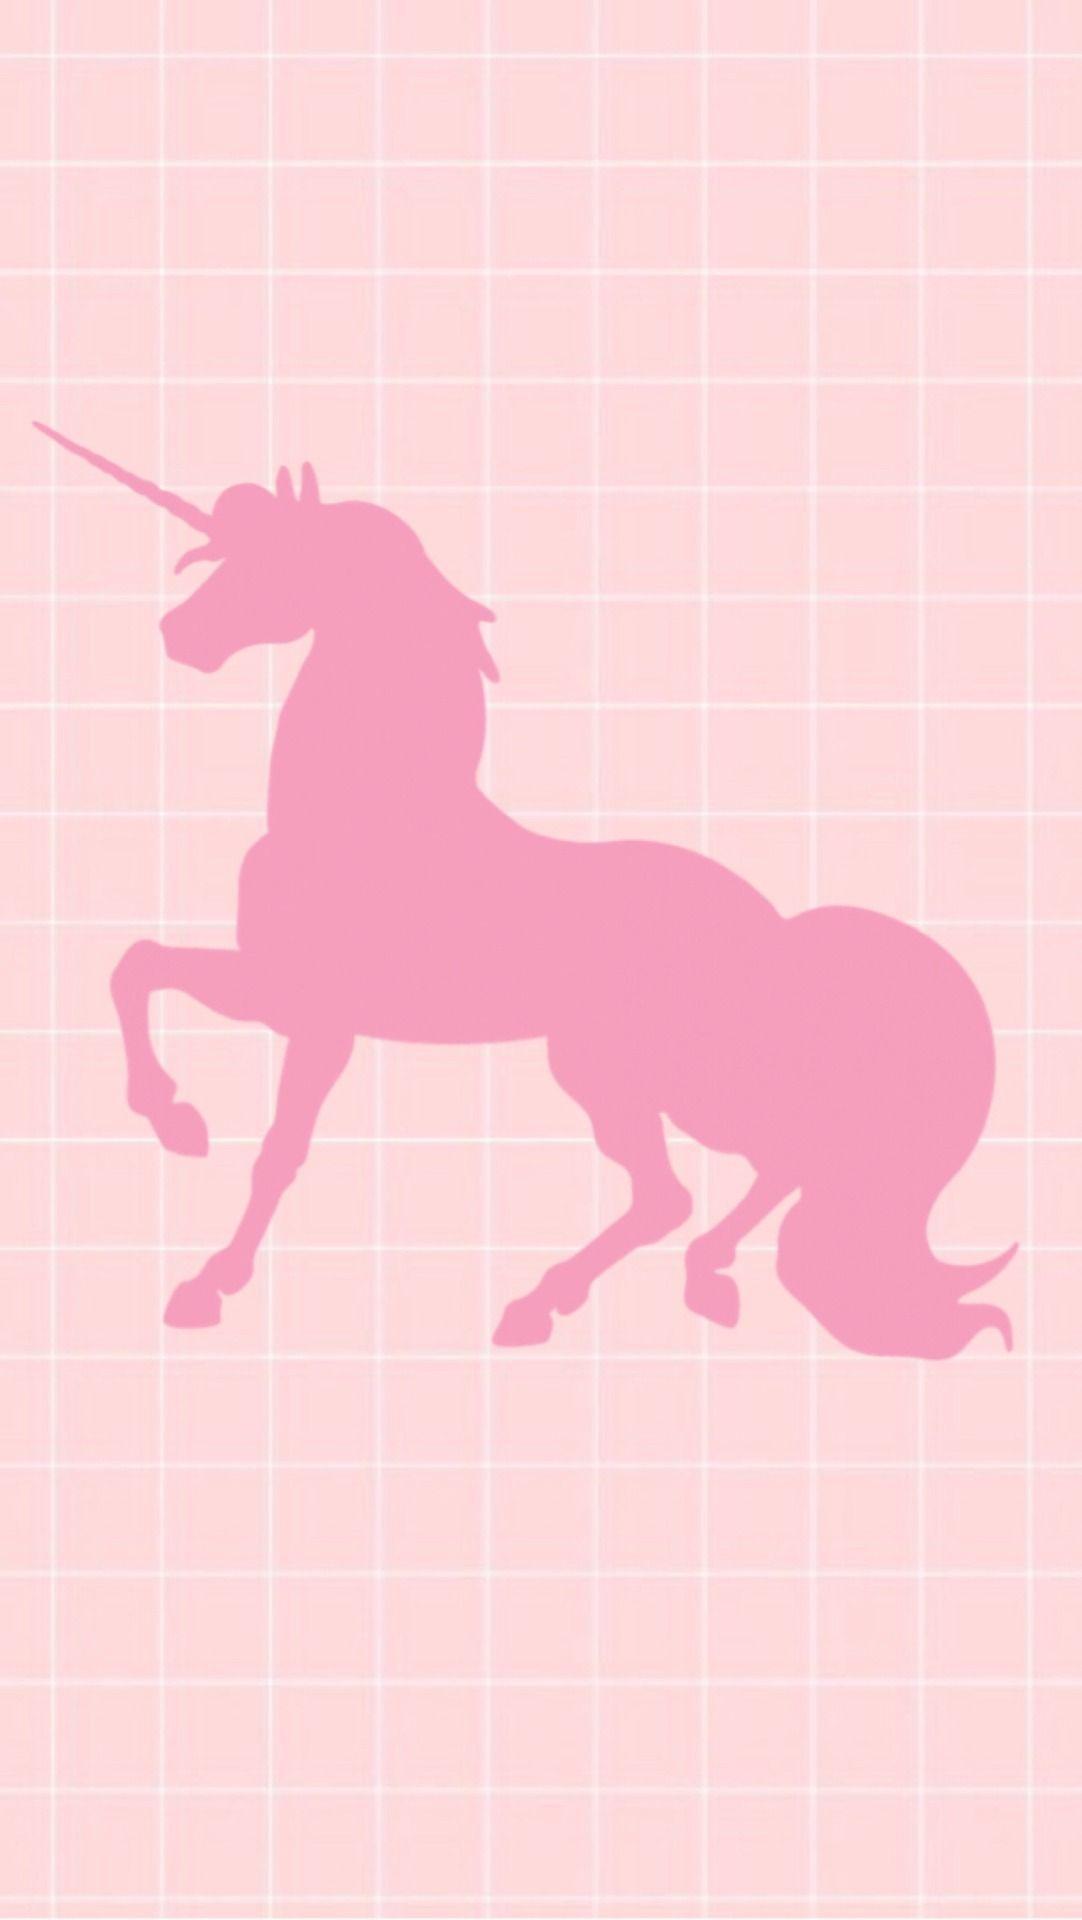  Pink  Unicorn  Wallpapers  Top Free Pink  Unicorn  